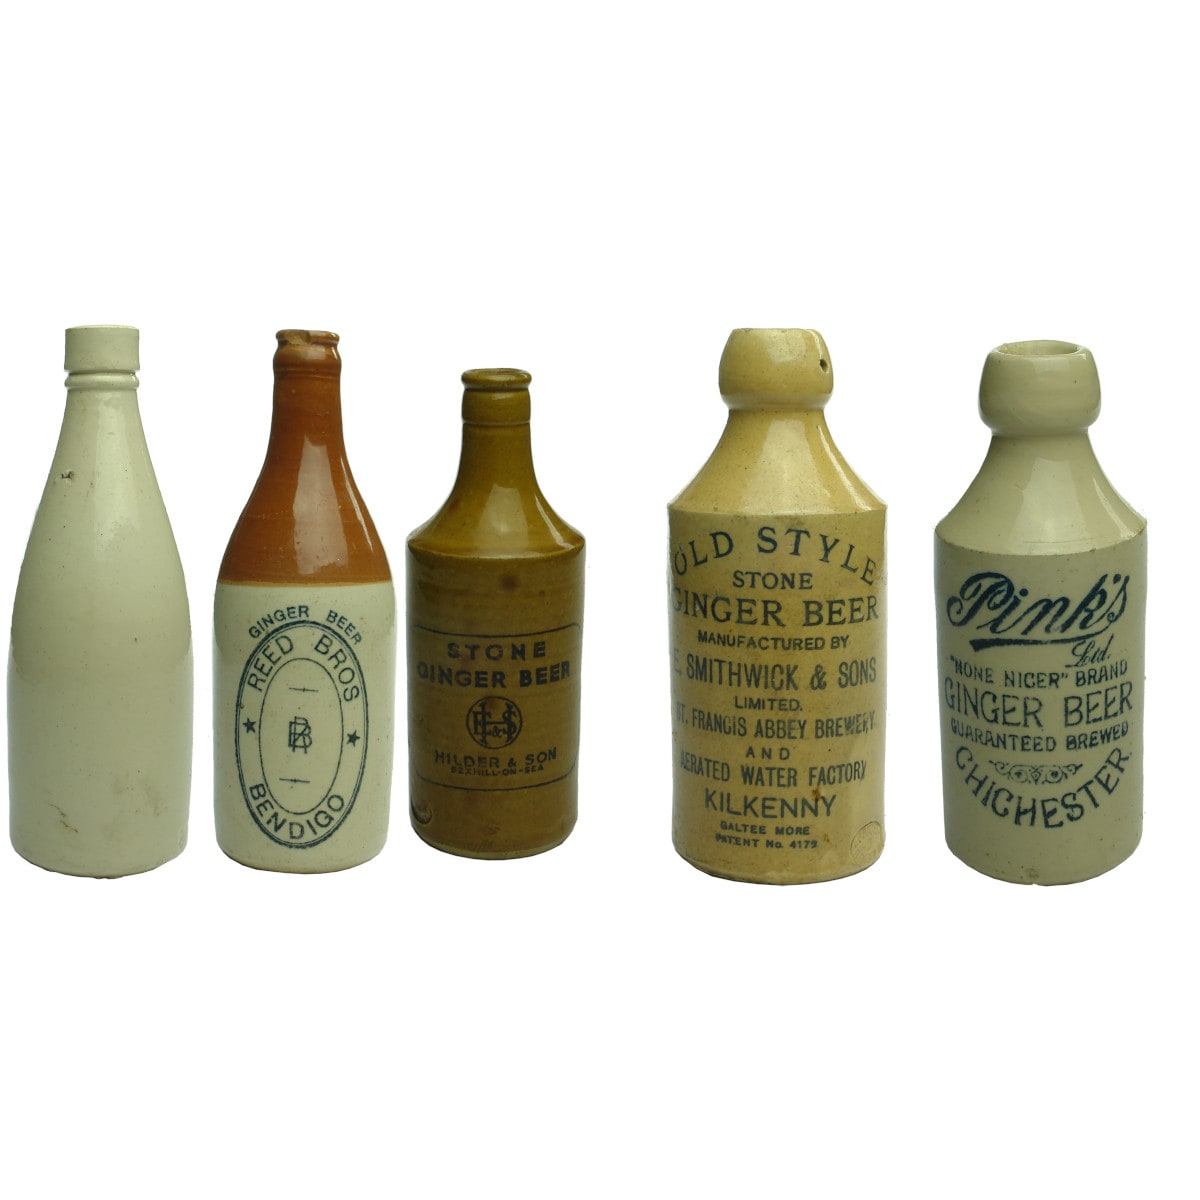 5 Ginger Beers / Stout: Port Dundas; Reed Bros, Bendigo; Hilder & Son; Smithwick, Kilkenny; Pinks Chichester.